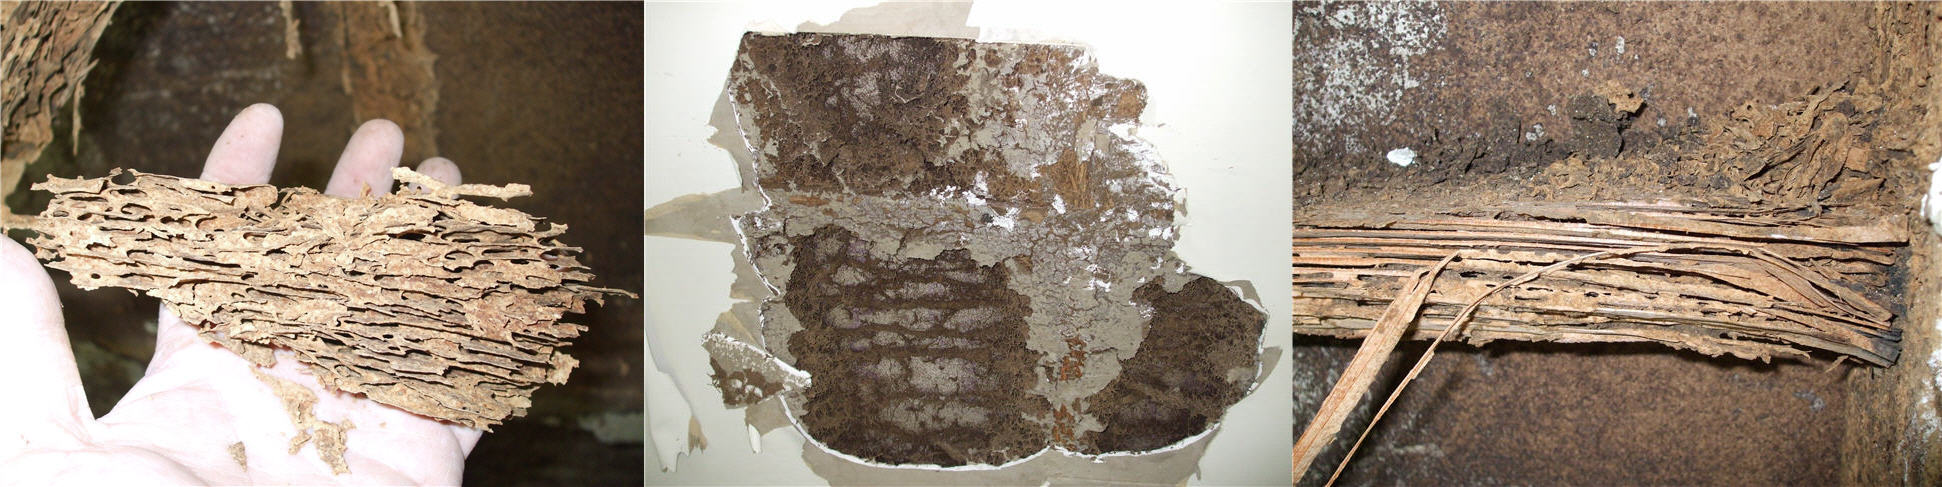 Termite-pest-control-sydney-banner-3.jpg